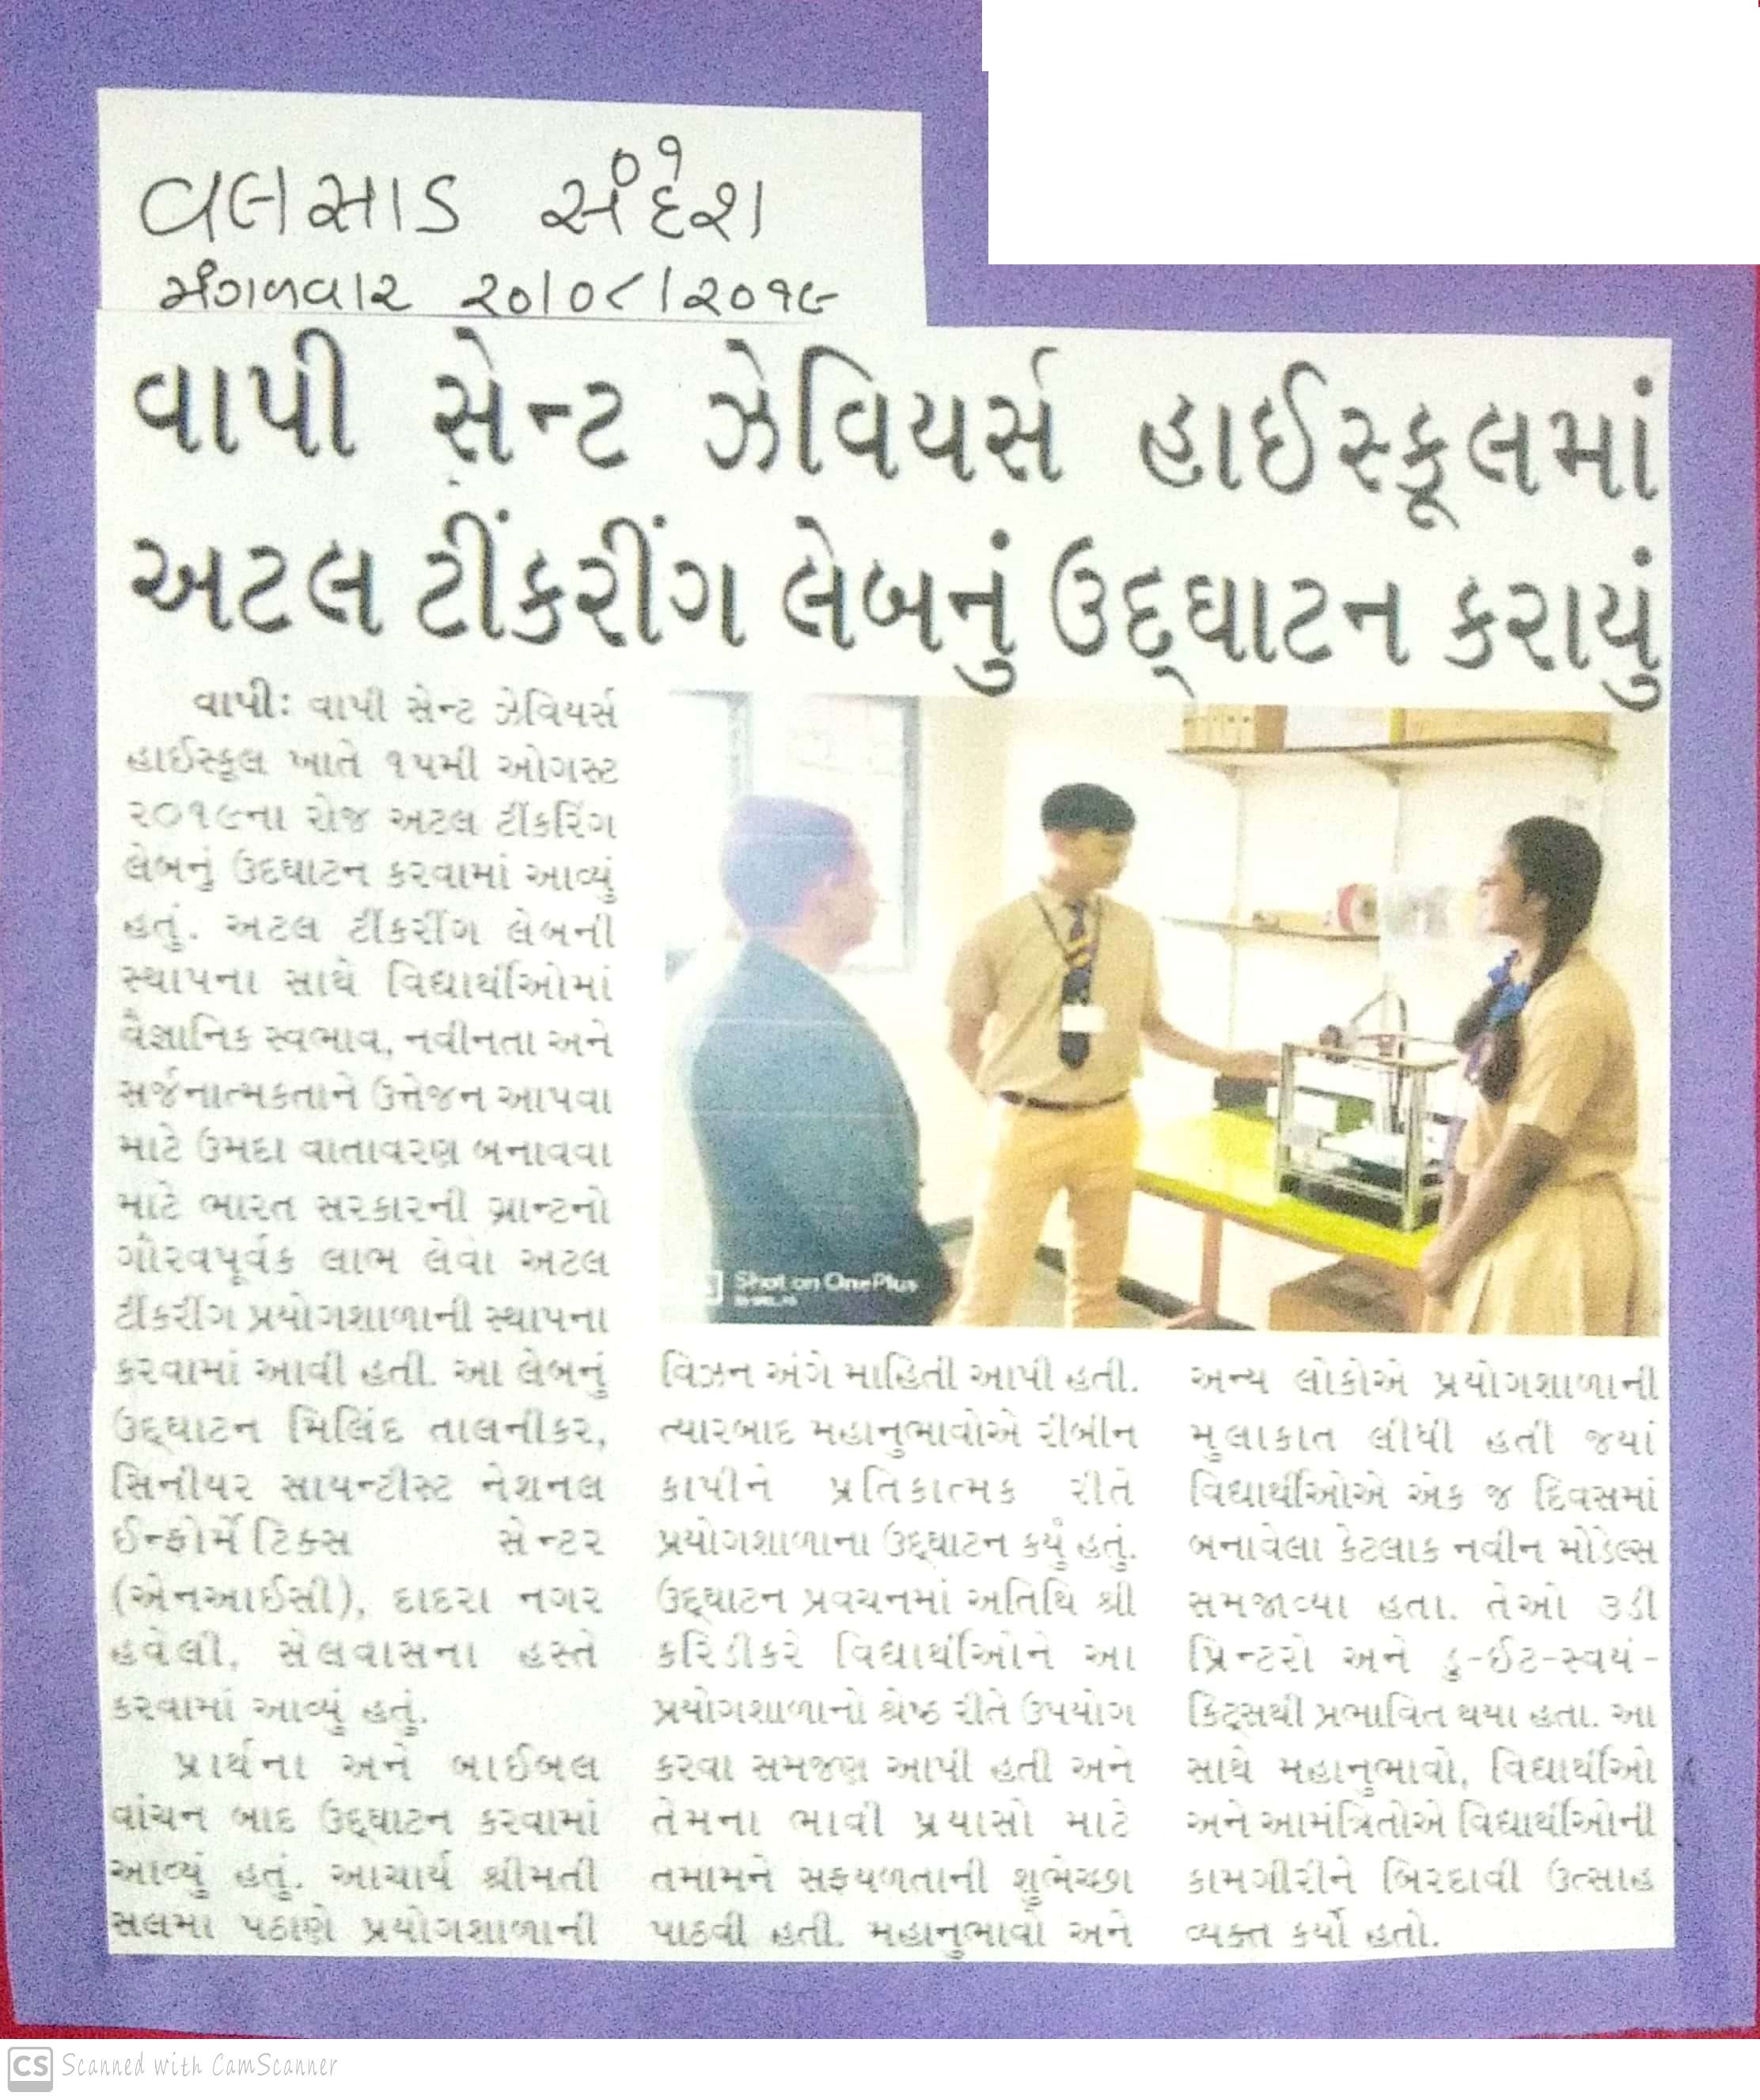 Alt Lab Inauguration Ceremony Was Featured In Samachar